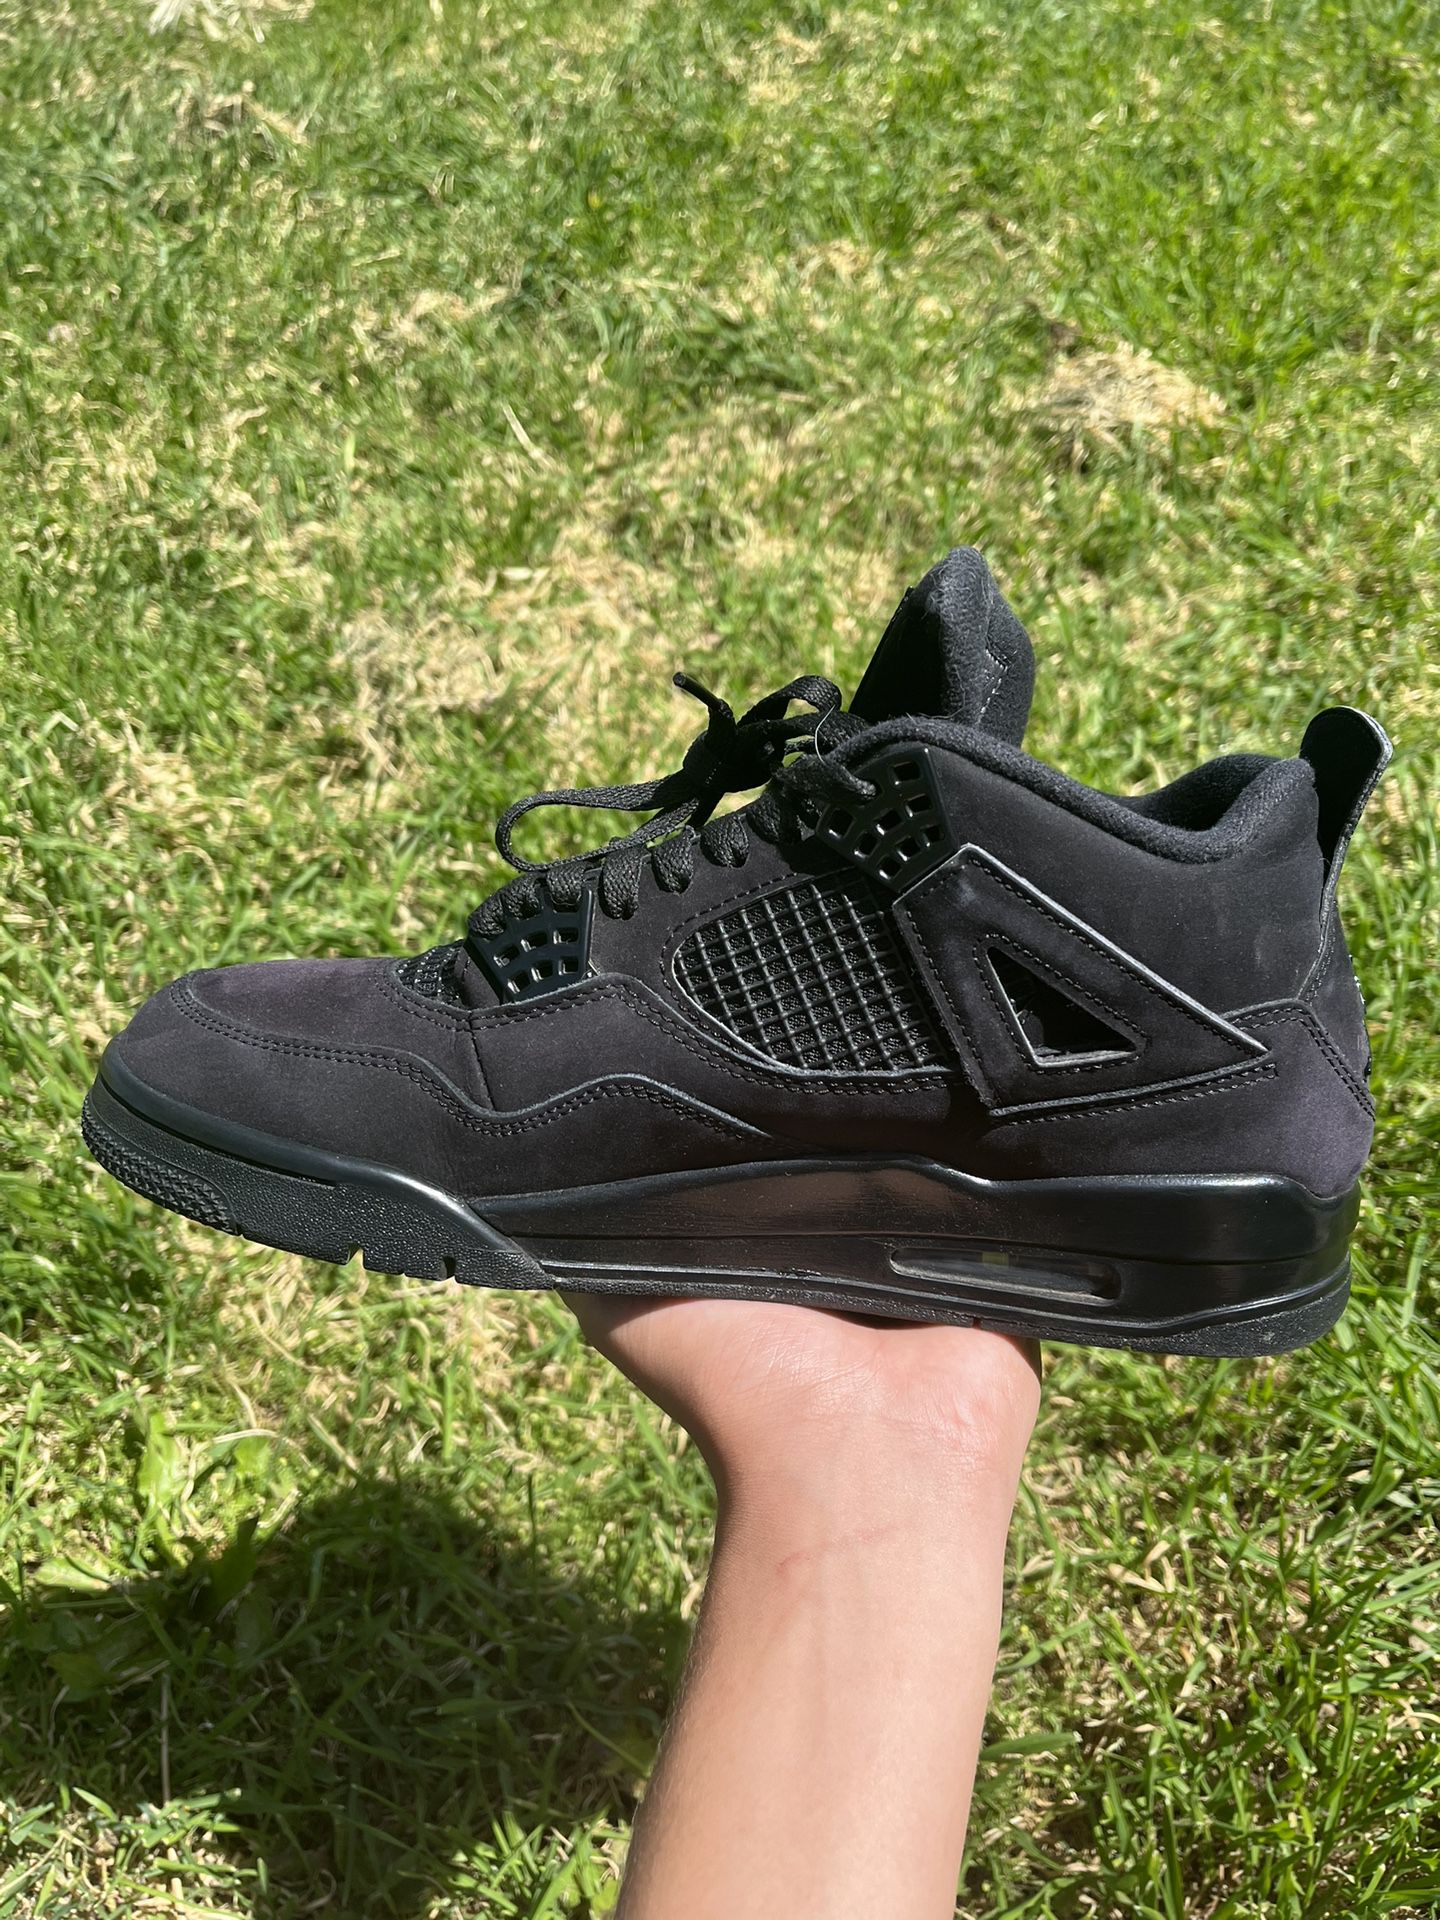 Air Jordan 4 Retro Black Cat Size 11 for Sale in Downey, CA - OfferUp